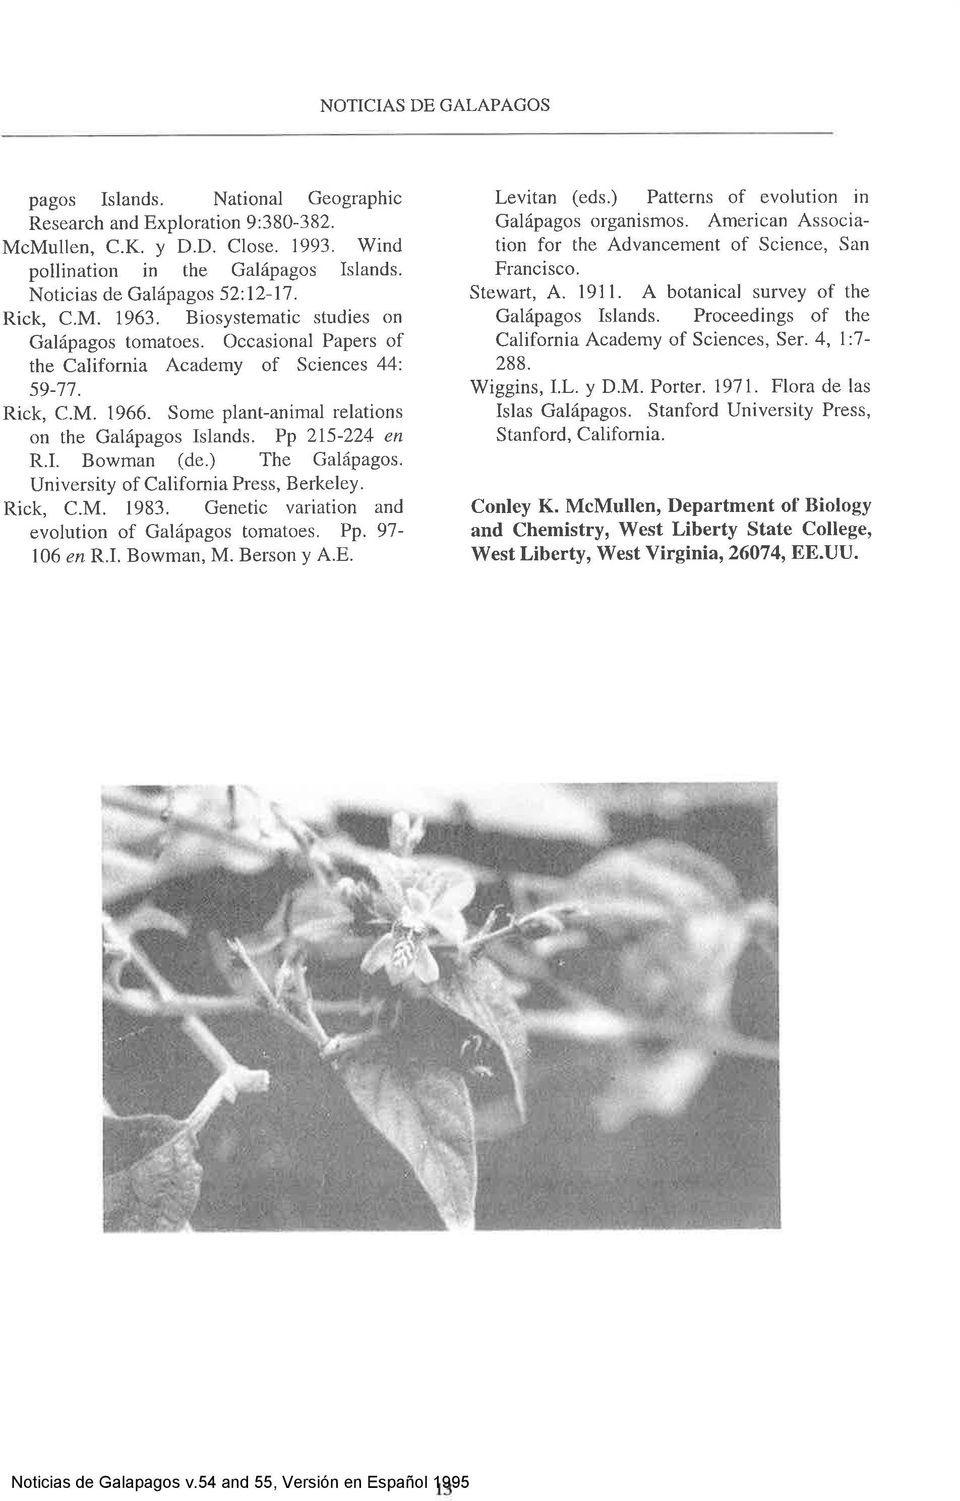 Some plant-animal relations on the Galápagos Islands. Pp 215-224 en R.I. Bowman (de.) The Galápagos. University of California Press, Berkeley. Rick, C.M. 1983.